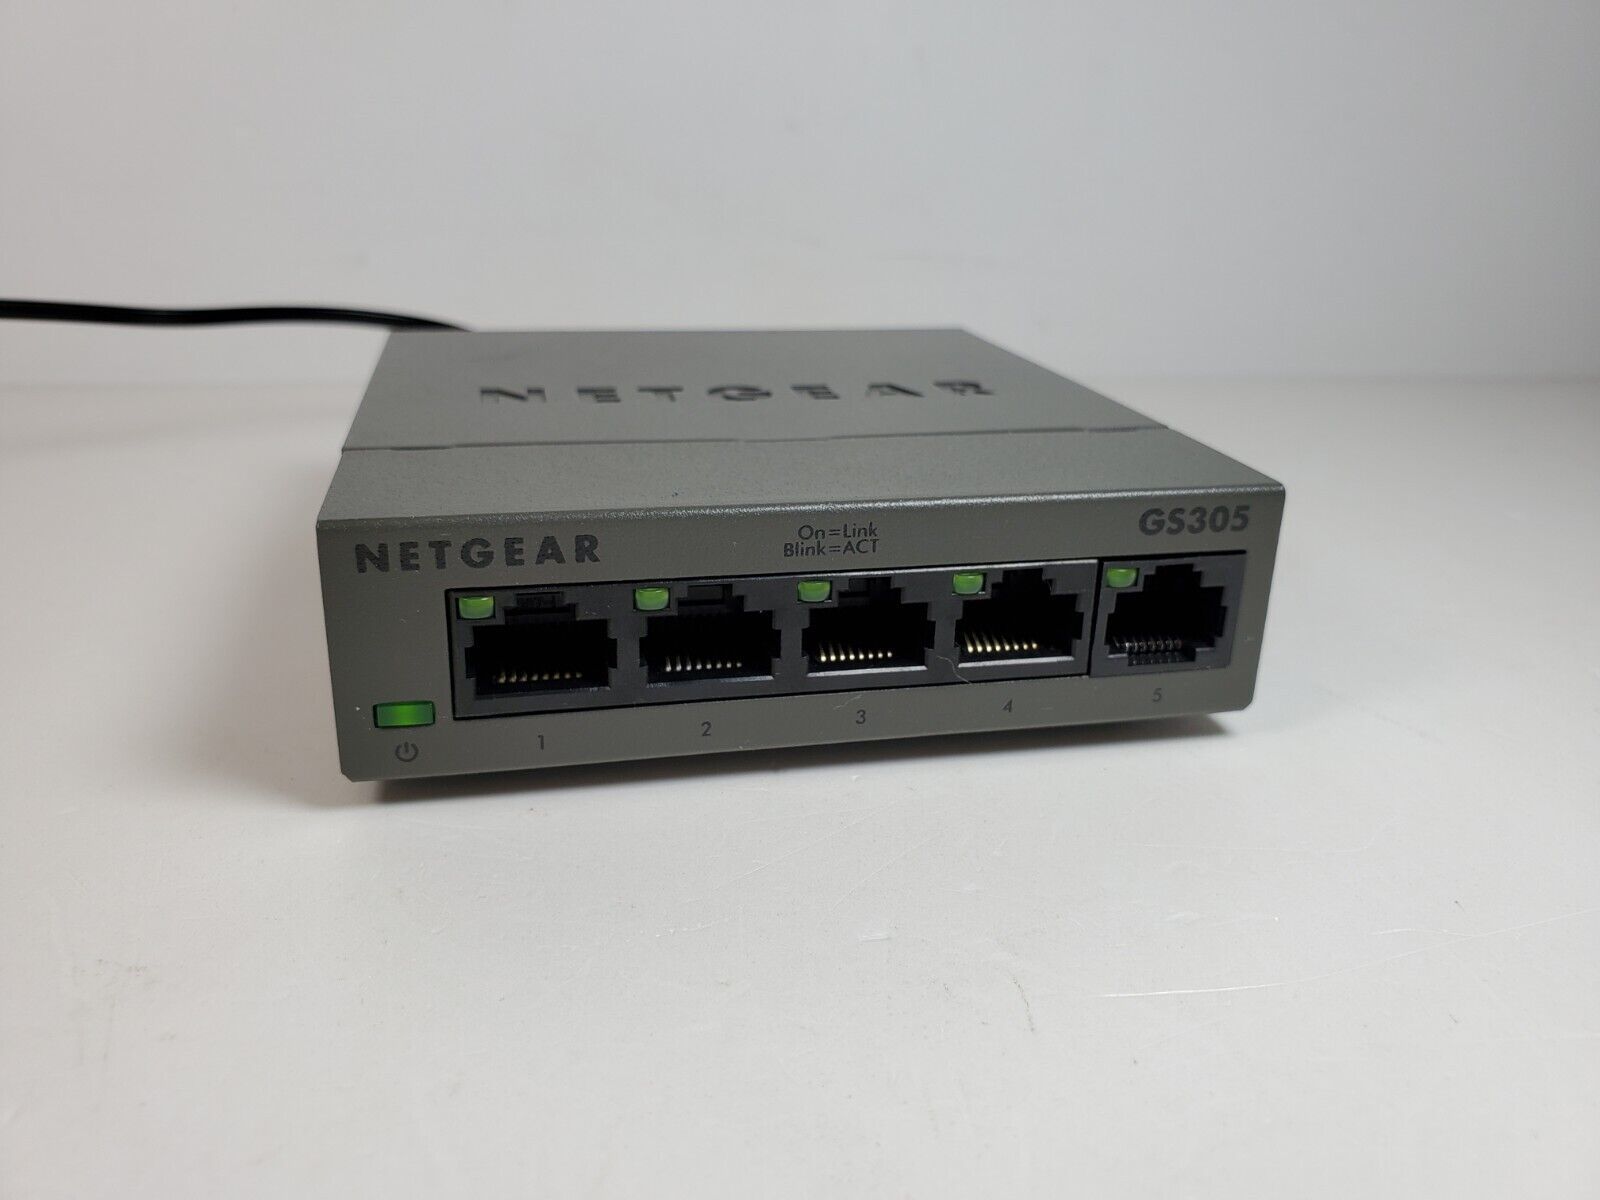 Primary image for NETGEAR GS305 Mini 5-Port Fast Gigabit Ethernet Switch w/ Power Cord